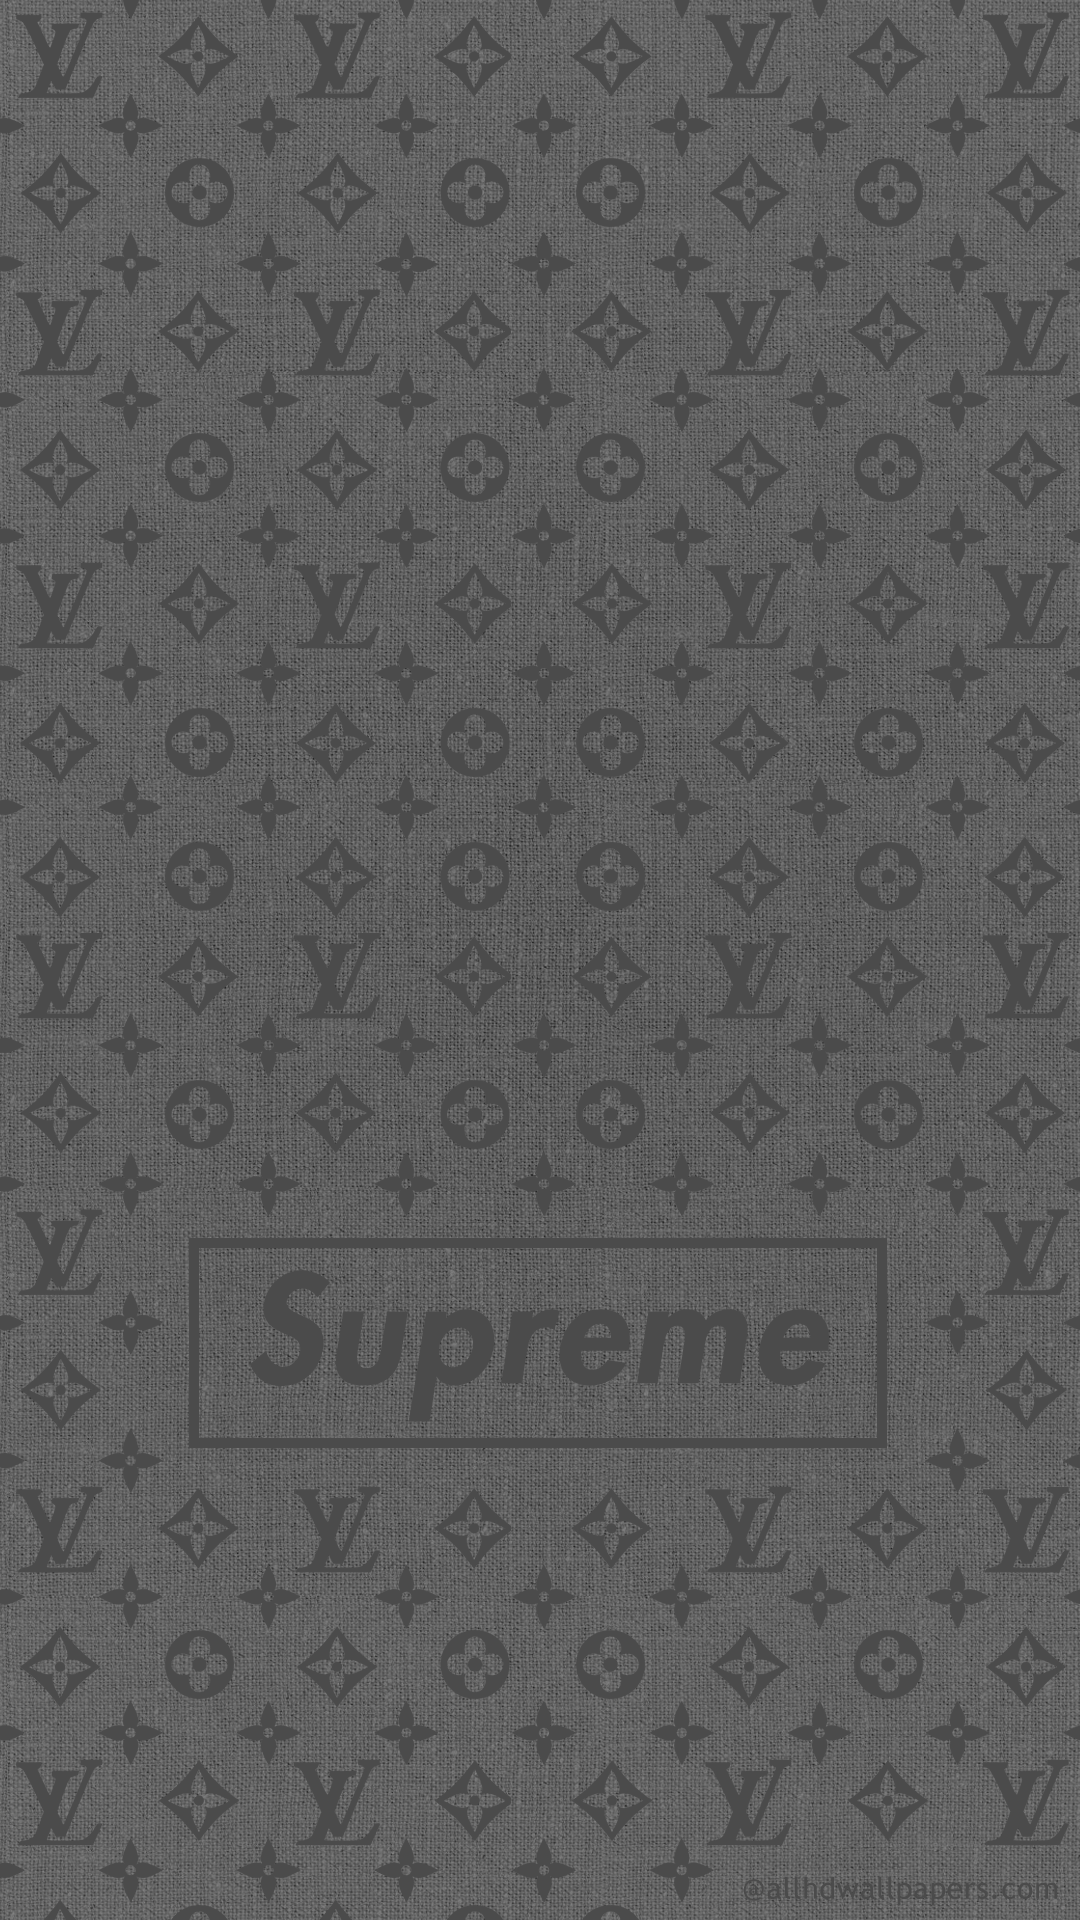 Louis Vuitton Supreme Wallpaper Iphone 7